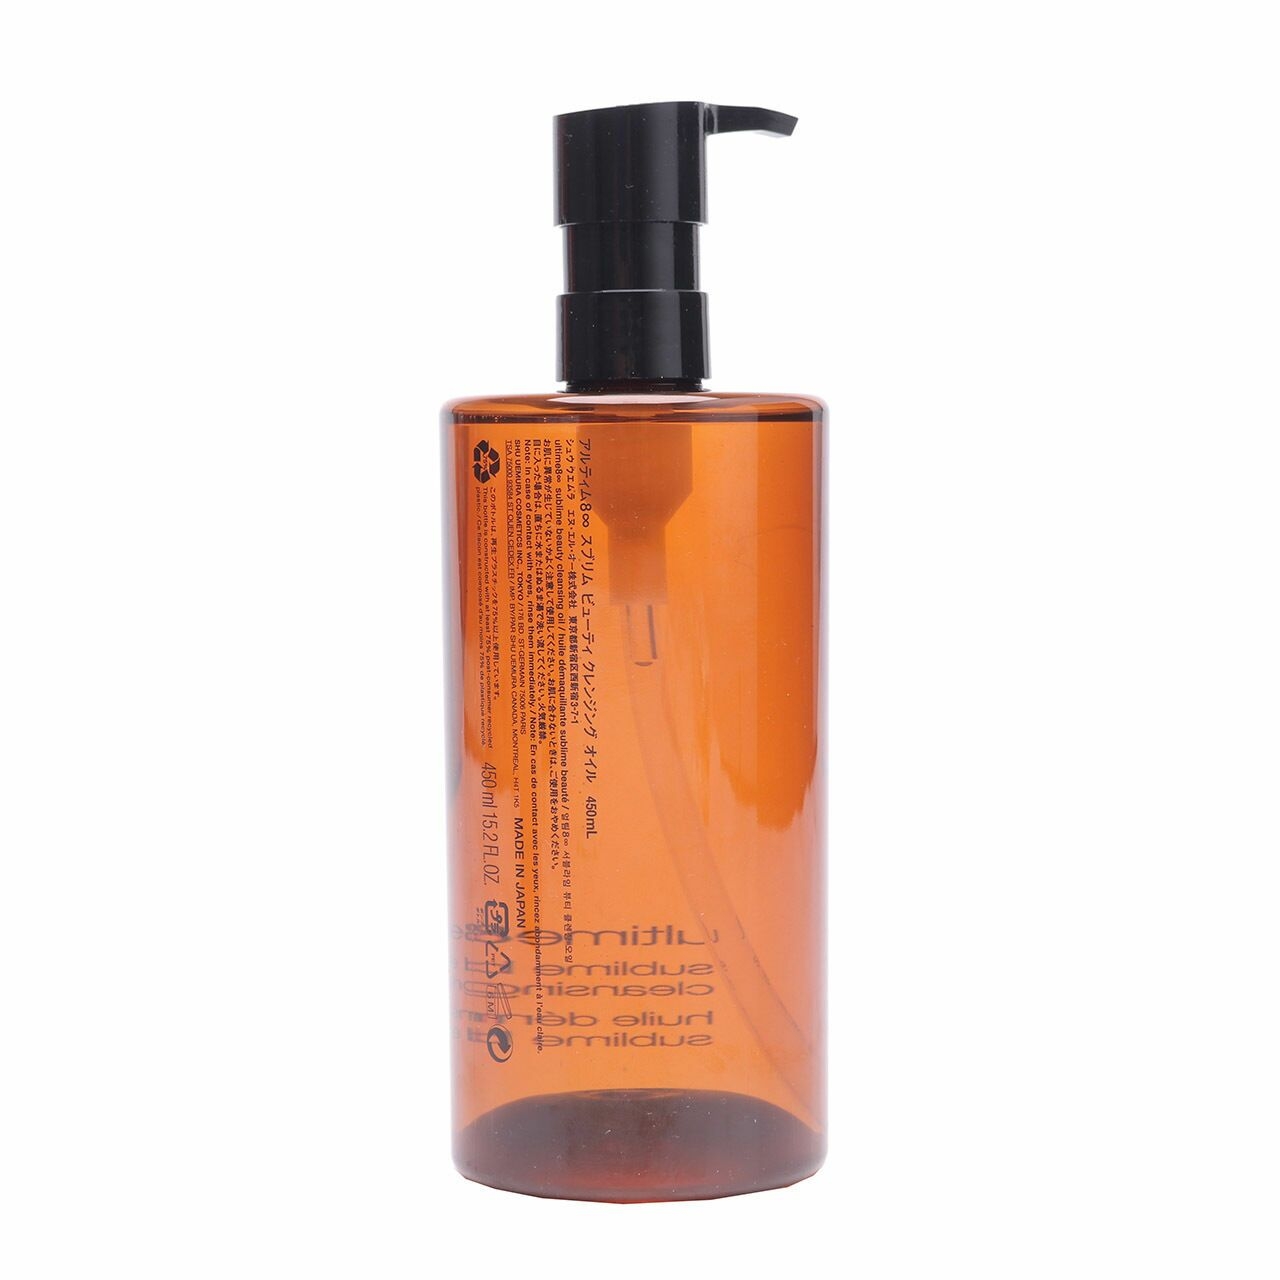 Shu Uemura Skin Purifier Ultime8 Cleansing Oil Sublime Beauty Skin Care